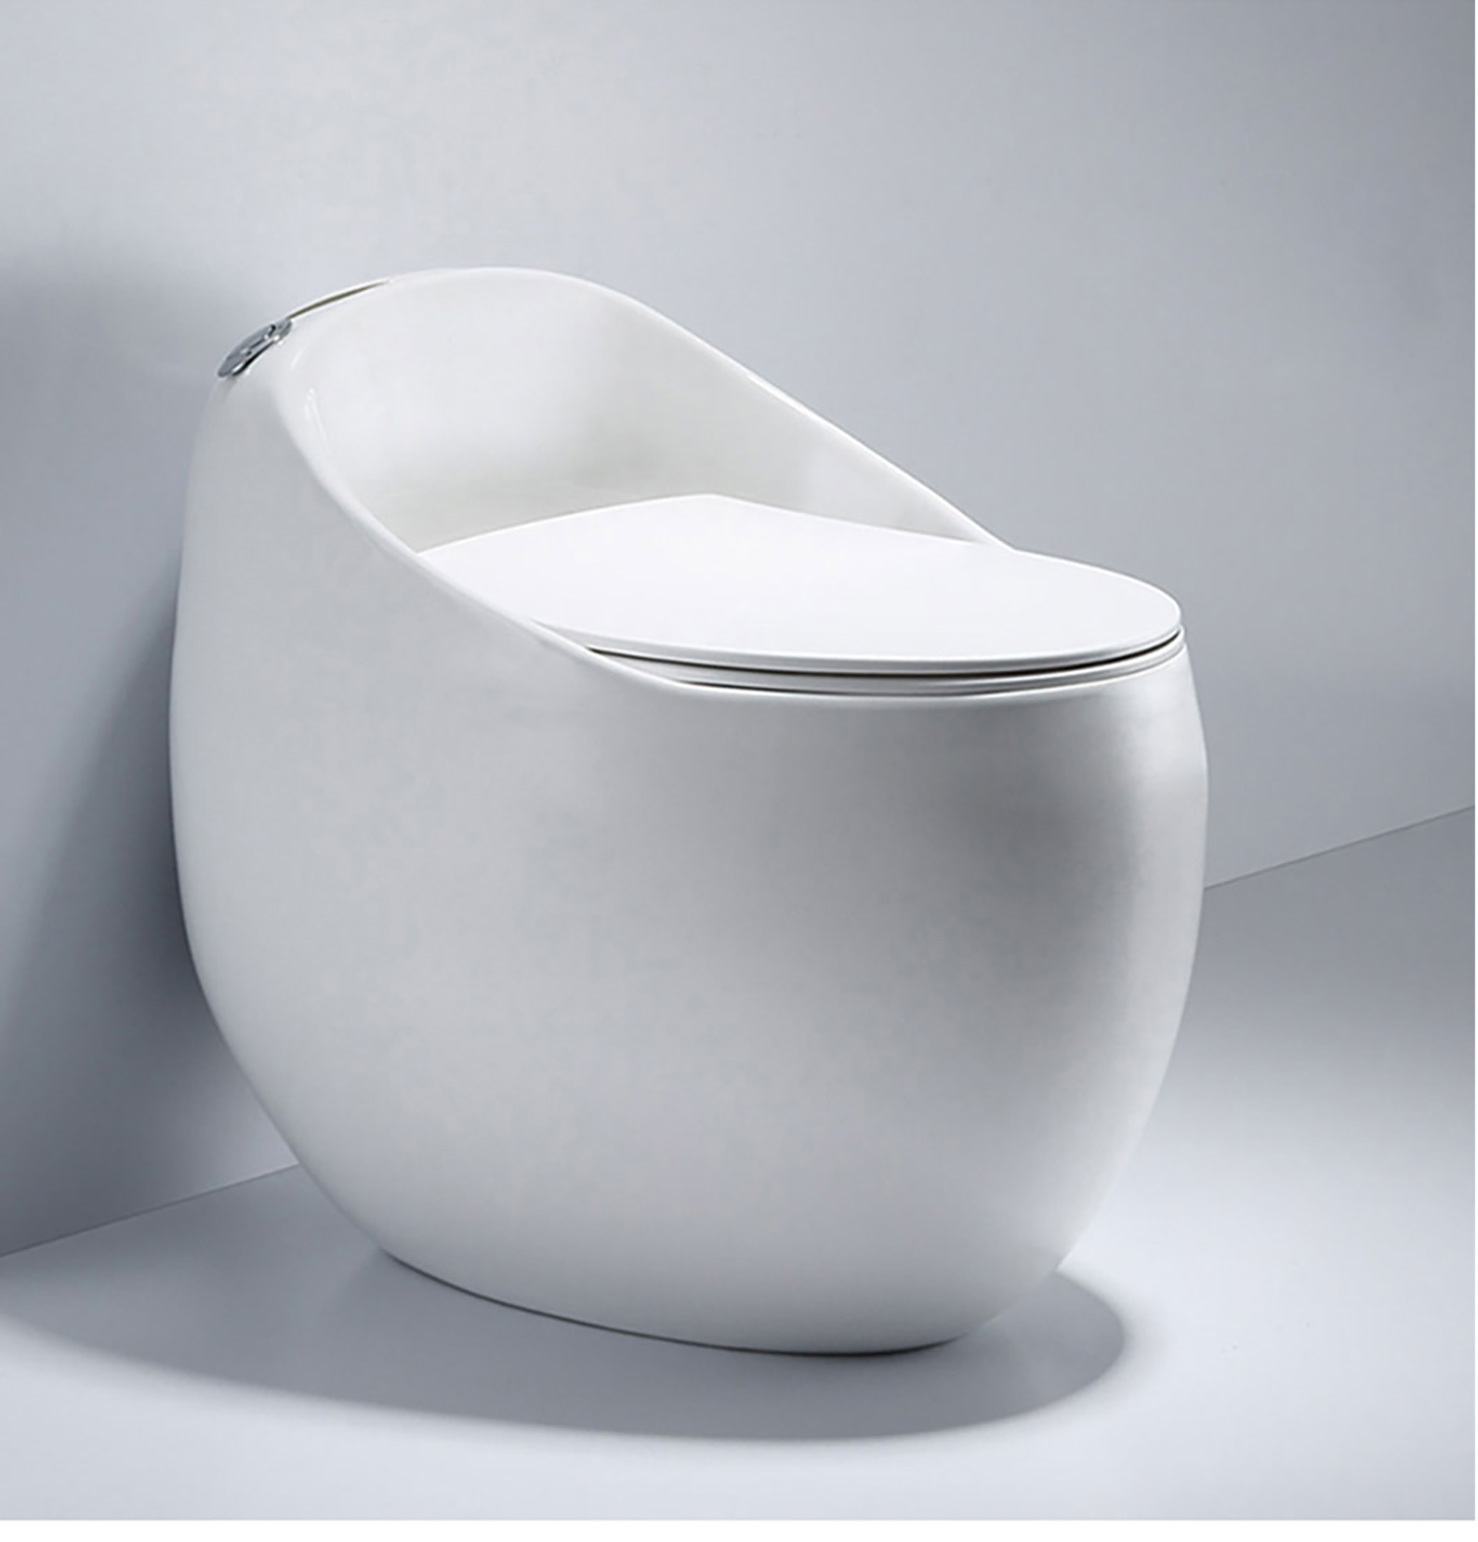 High quality sanitary ware bathroom toilette egg shaped ceramic short tank toilets bowl types wc (1)